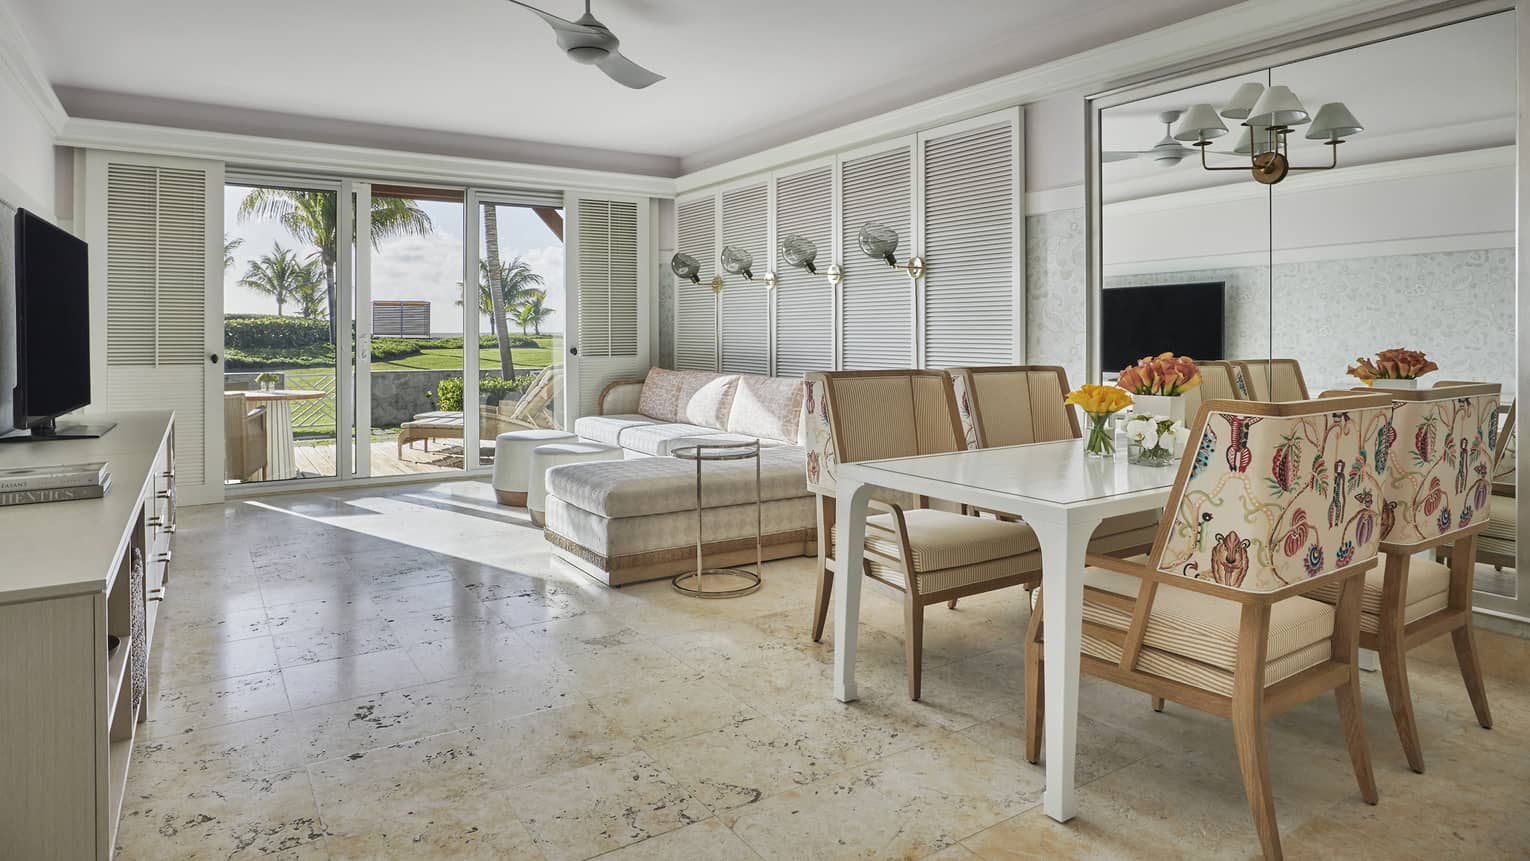 Spacious suite with marble floors, modern beach decor, glass patio doors to garden